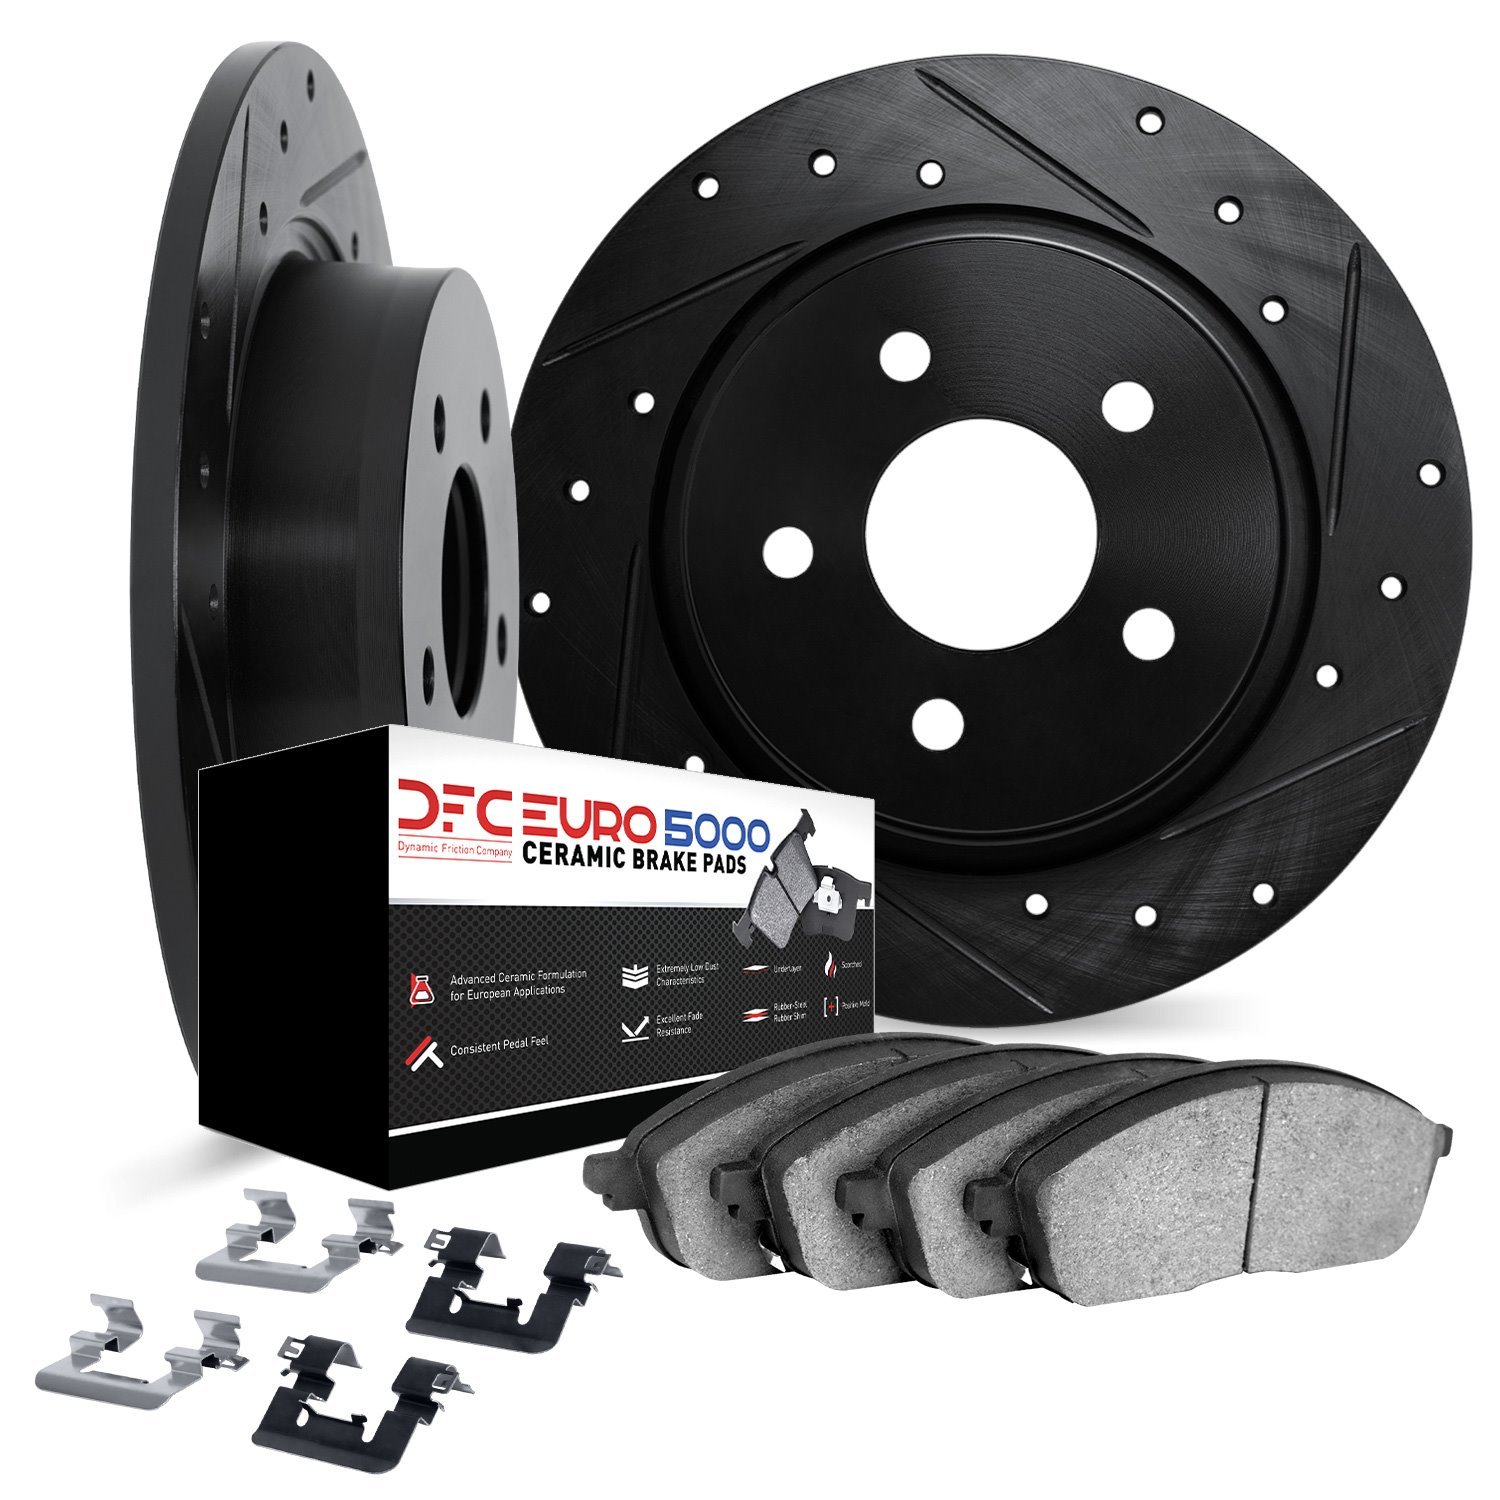 8612-59006 Drilled/Slotted Brake Rotors w/5000 Euro Ceramic Brake Pads Kit & Hardware [Black], Fits Select Acura/Honda, Position